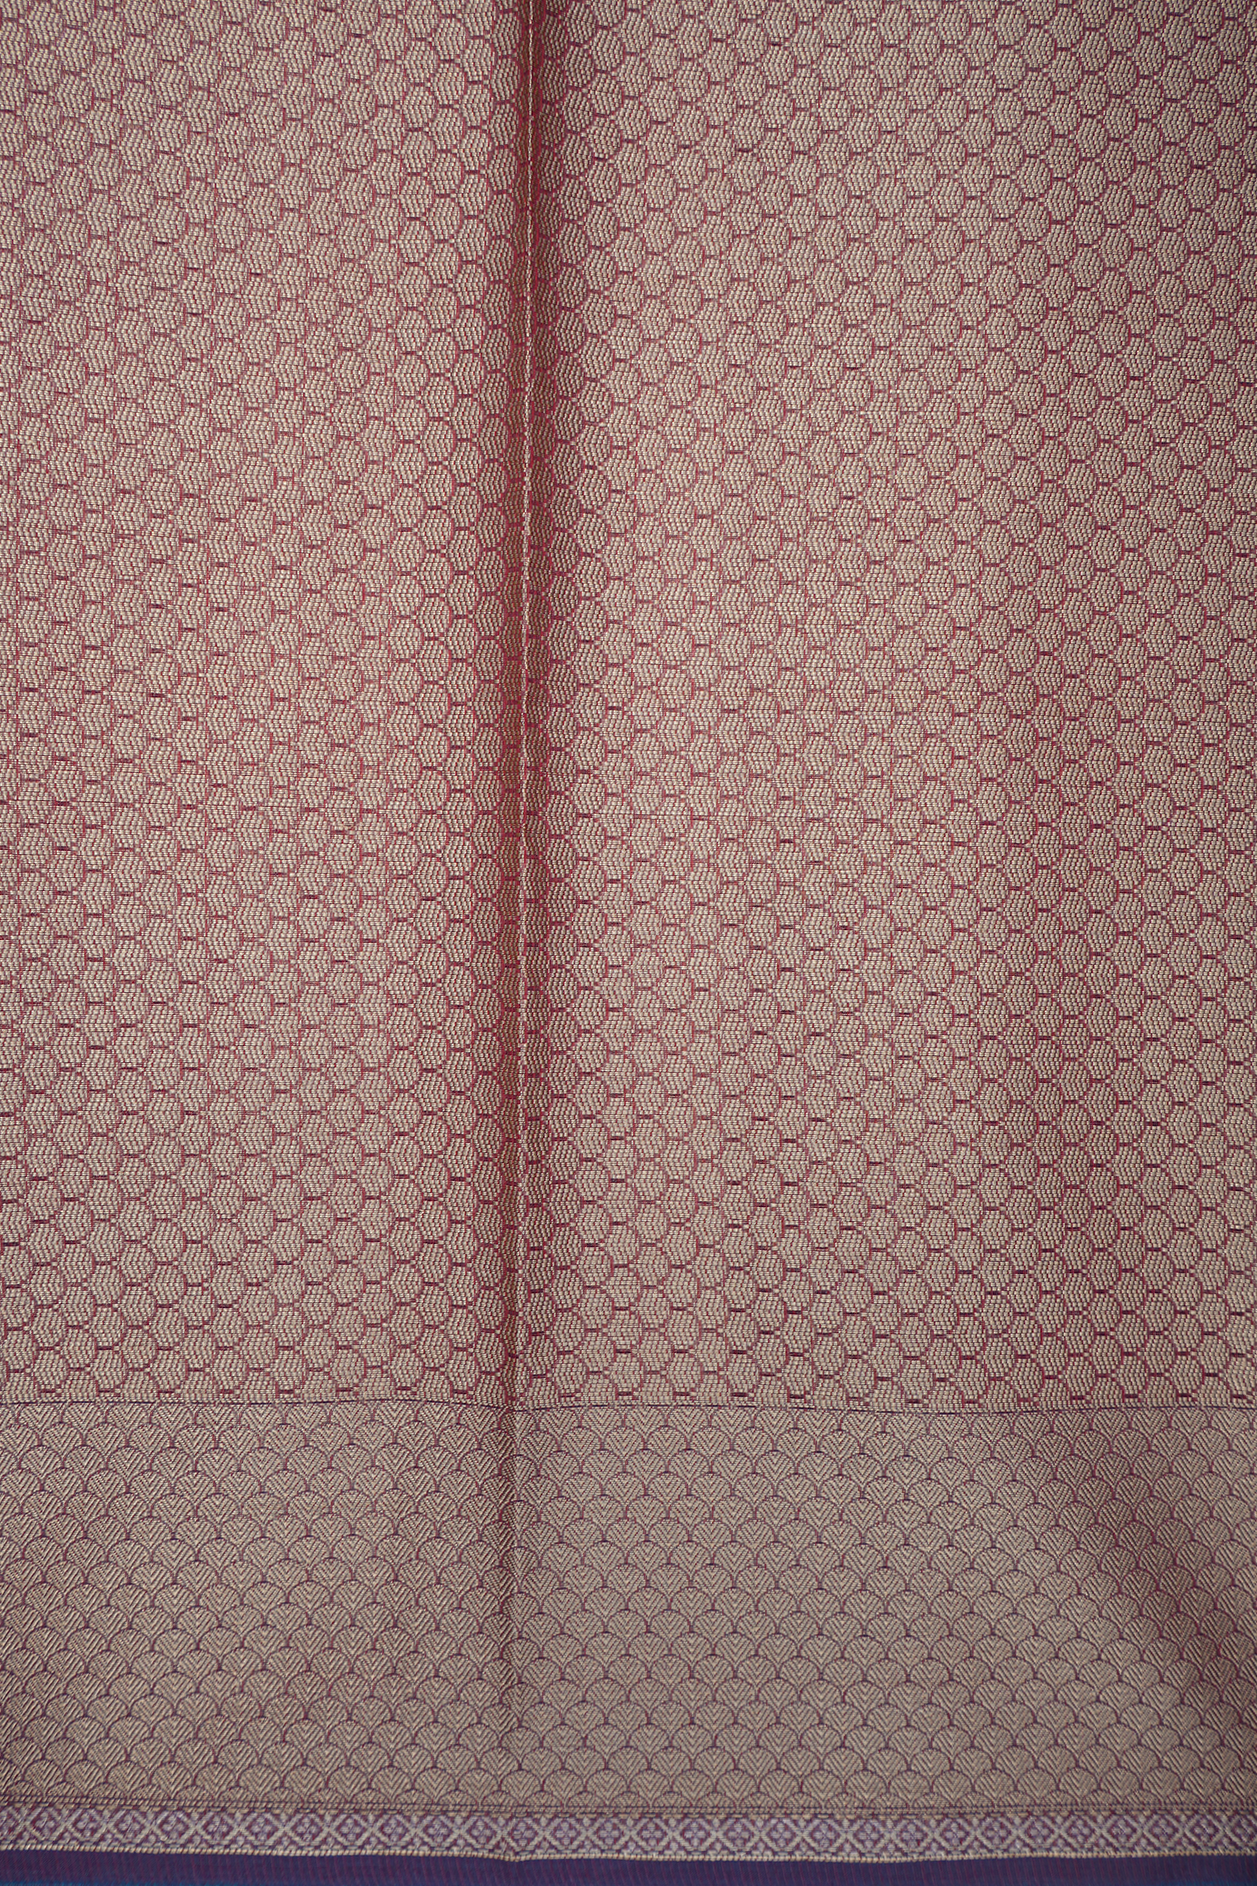 Blush Pink Kota Cotton Saree